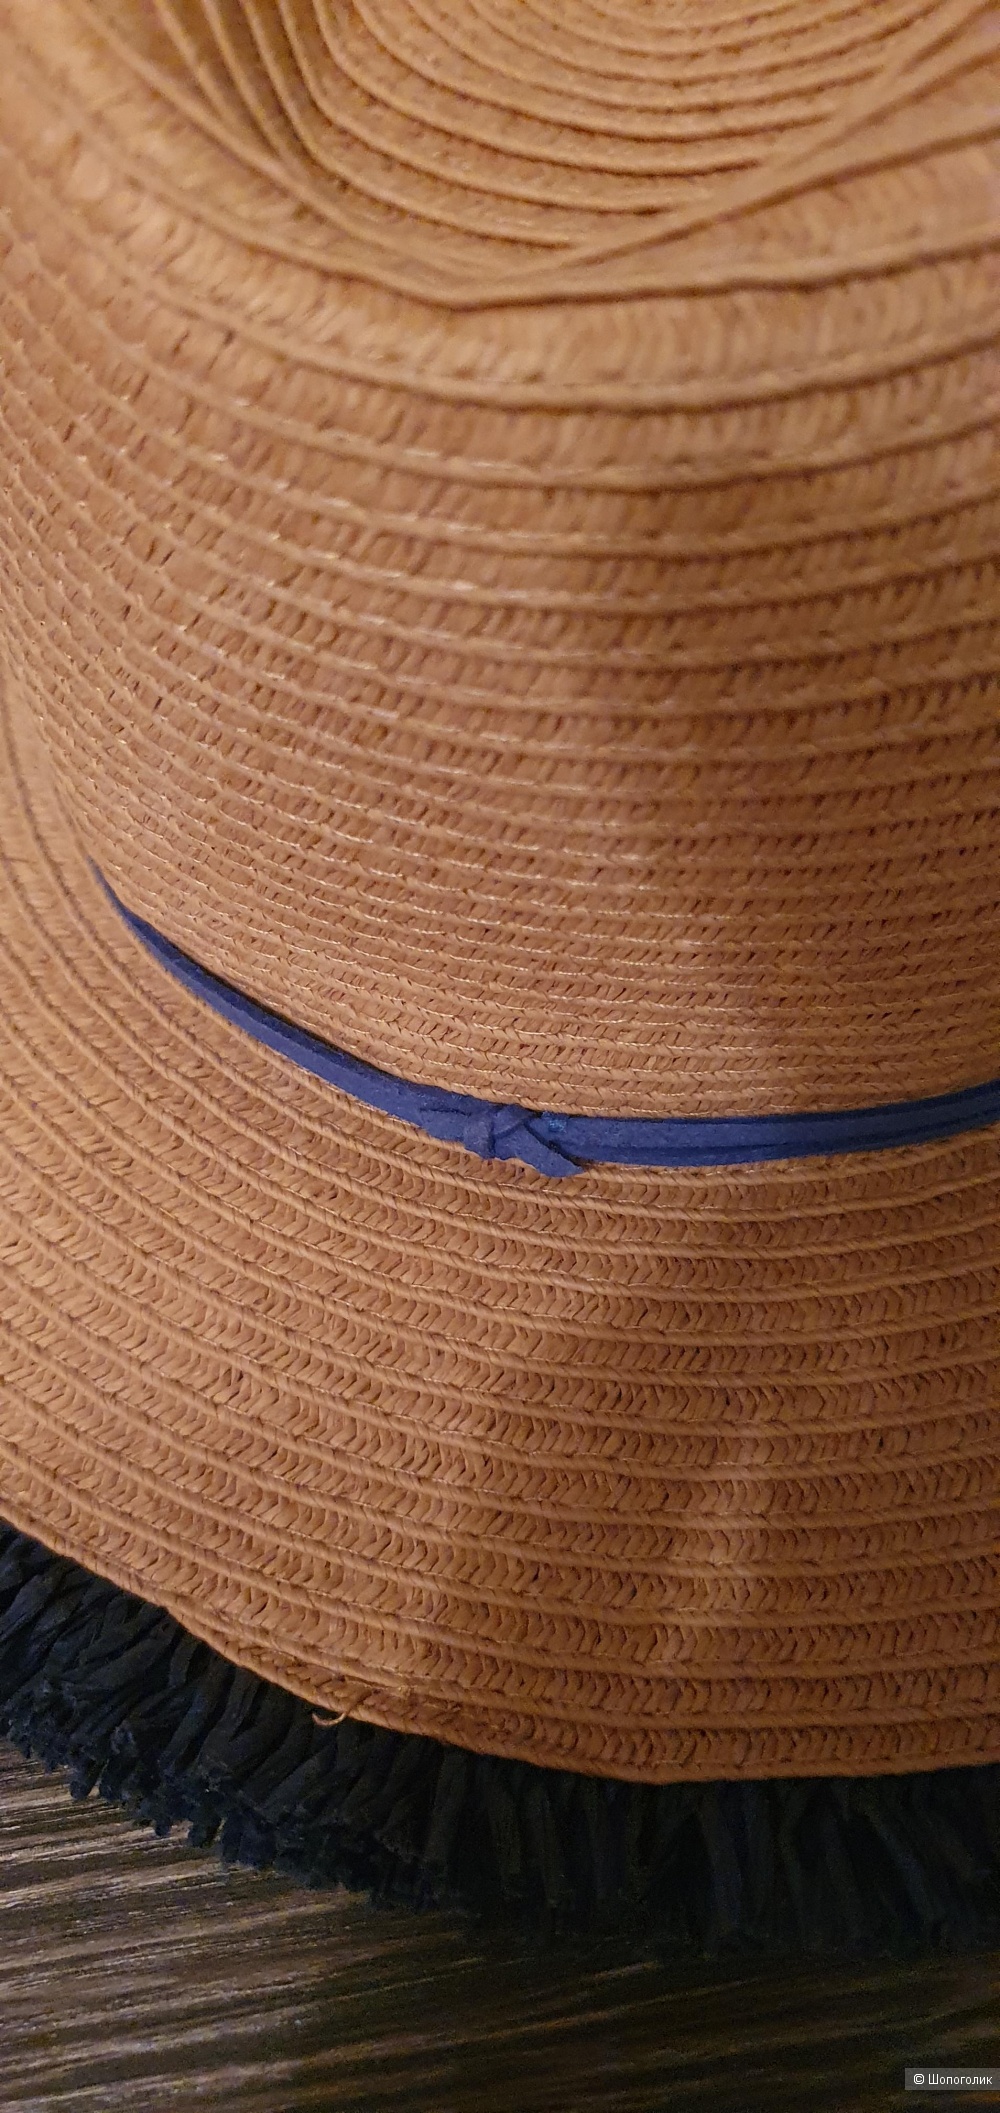 Шляпка CARPISA, 56-57 размер